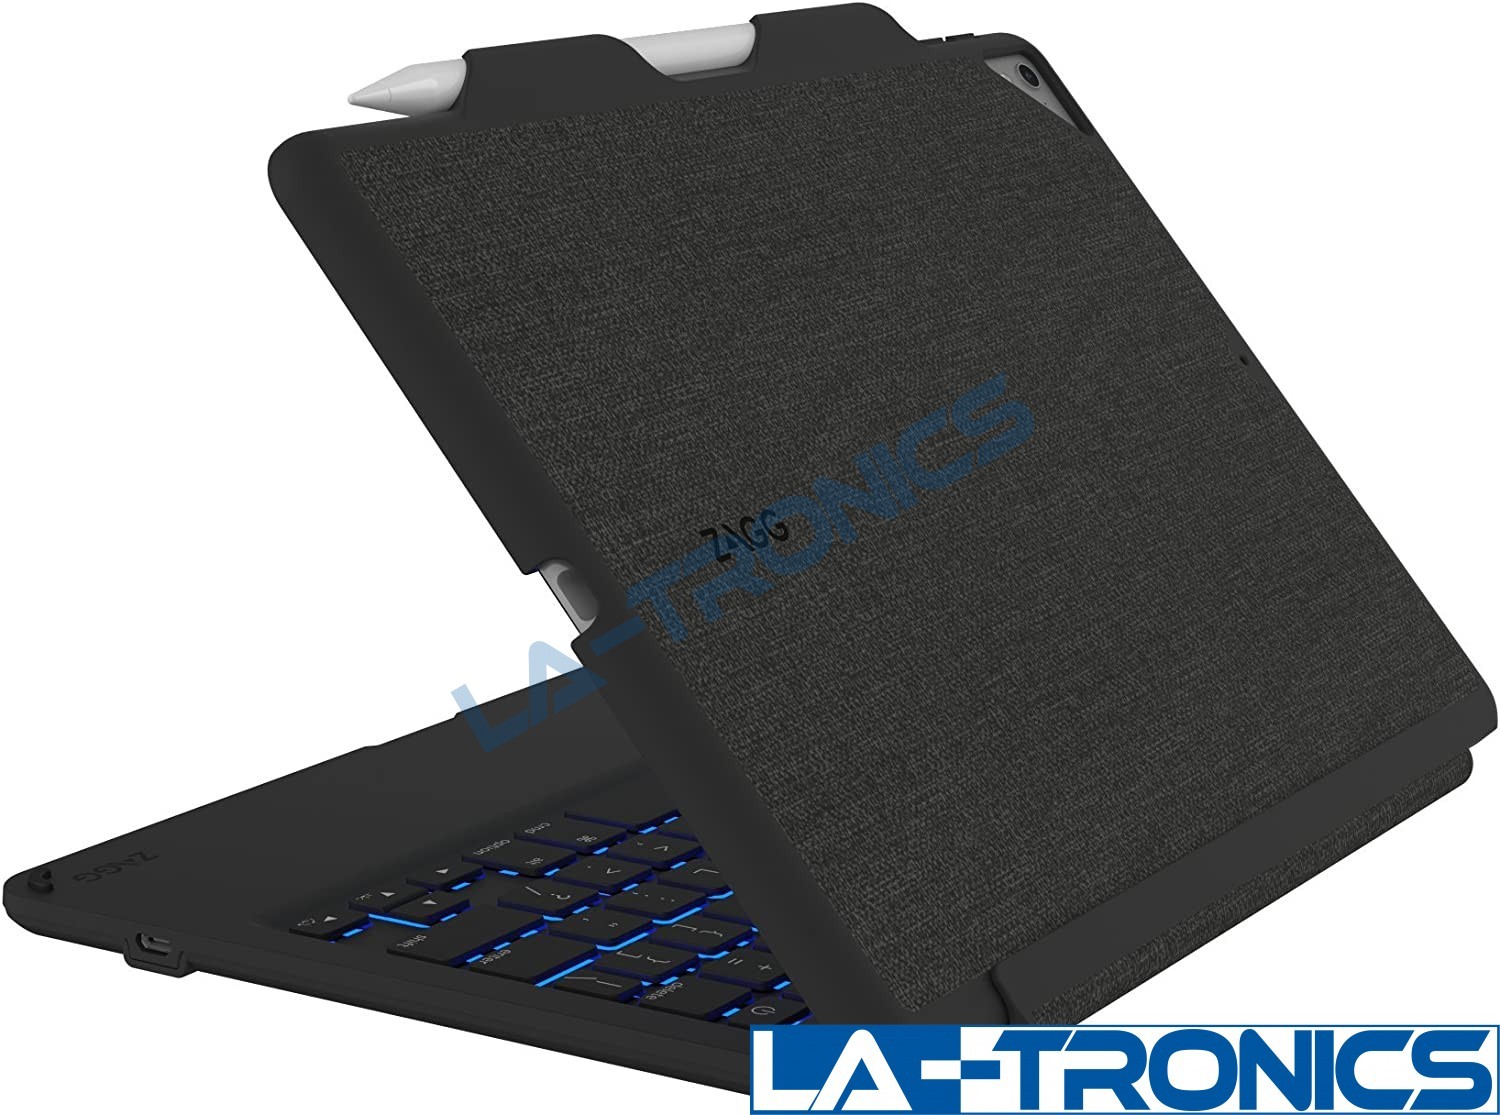 For IPad Pro 10.5 ZAGG Slim Book Ultrathin Case W/Detachable Bluetooth Keyboard